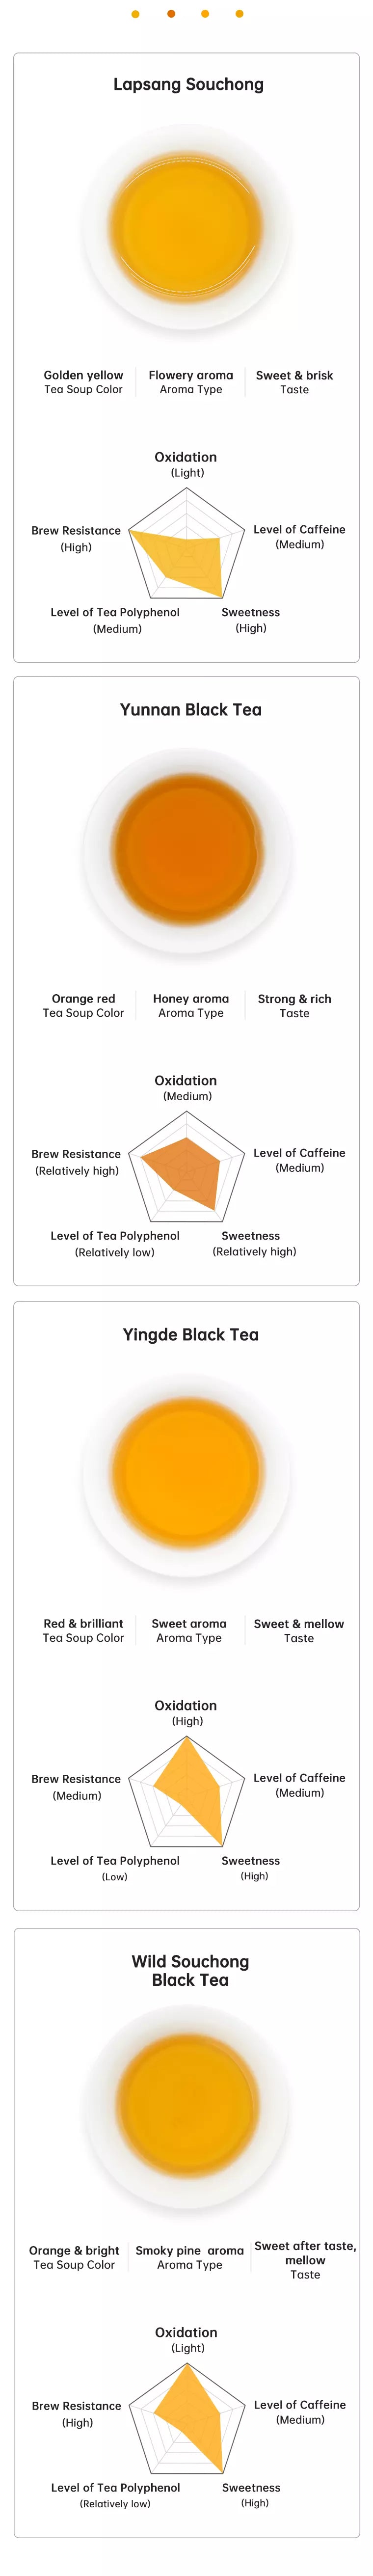 type-of-4-black-tea-key-information